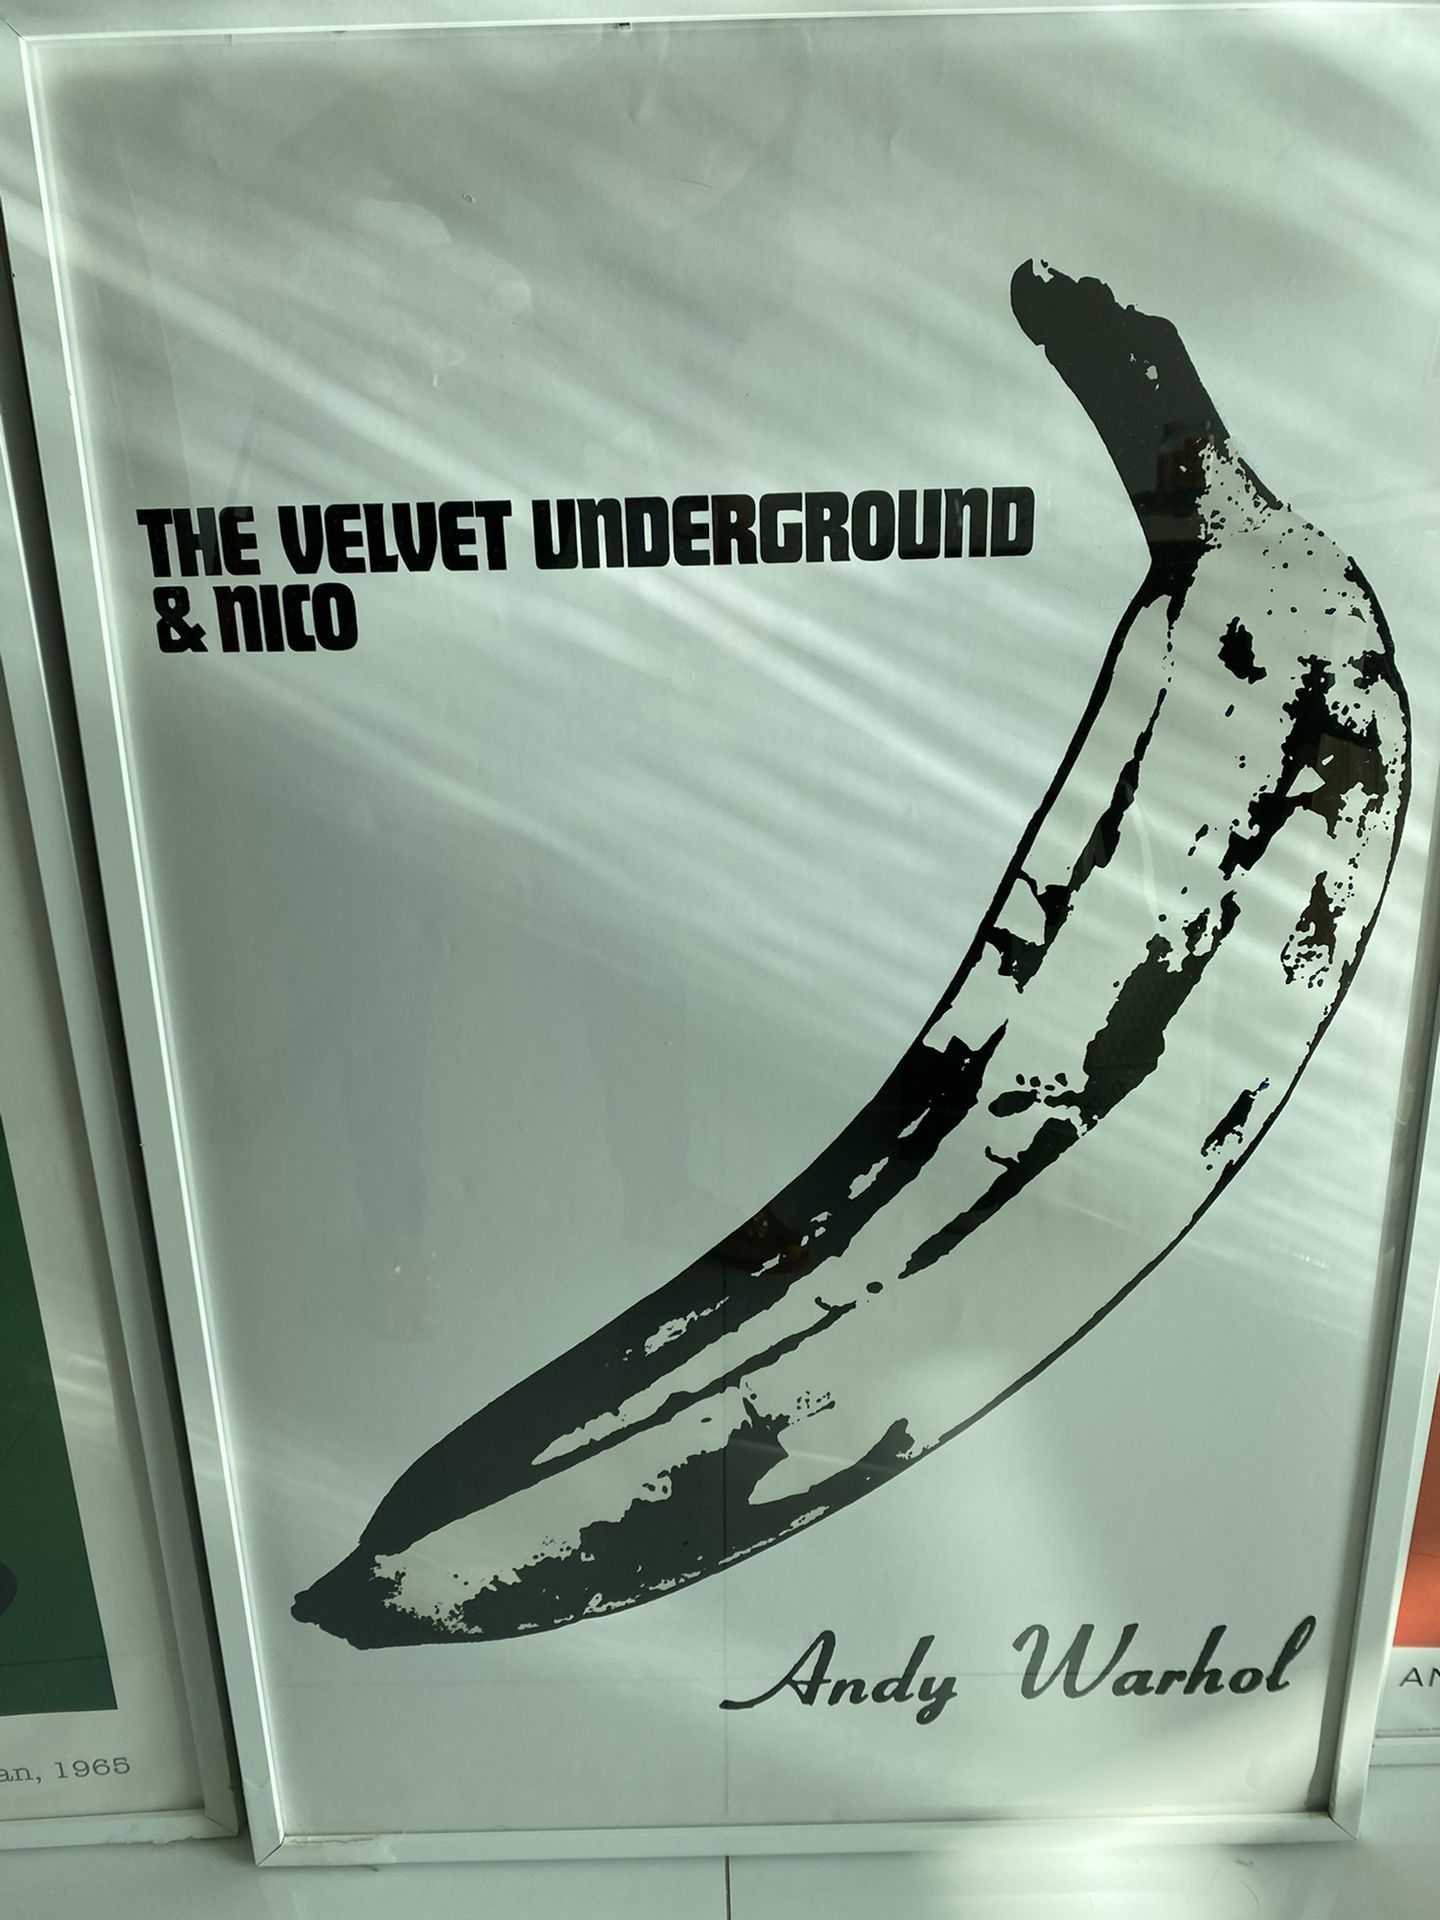 Andy Warhol Art - Banana - Underground